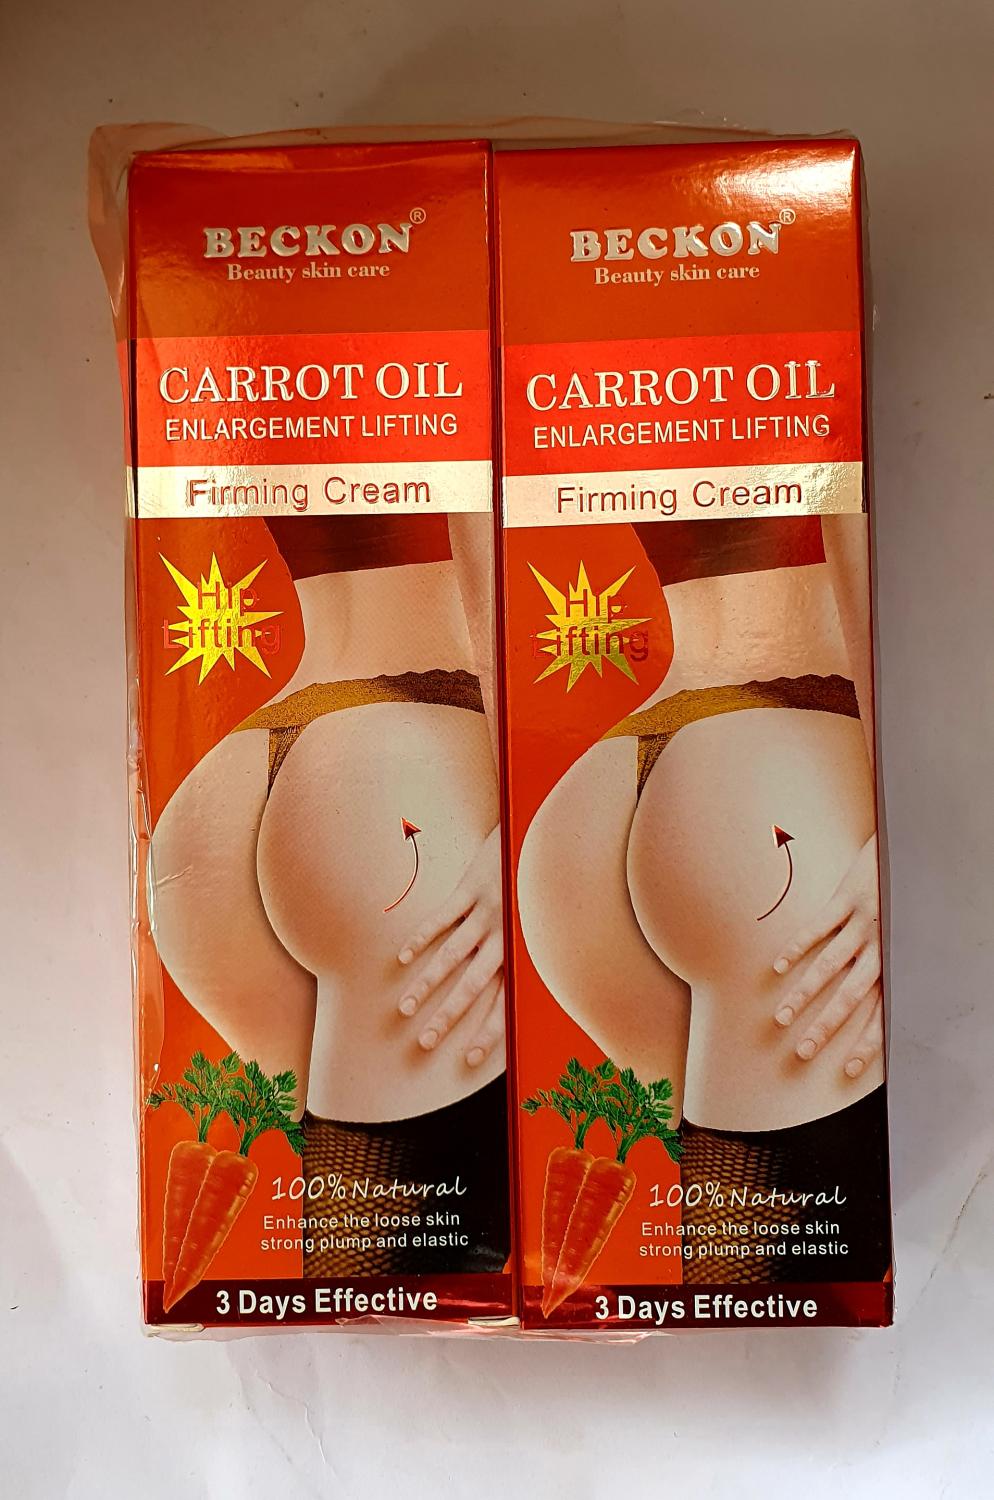 "BECKON" Carrot Oil-Based Hip Enlarging And Firming Cream